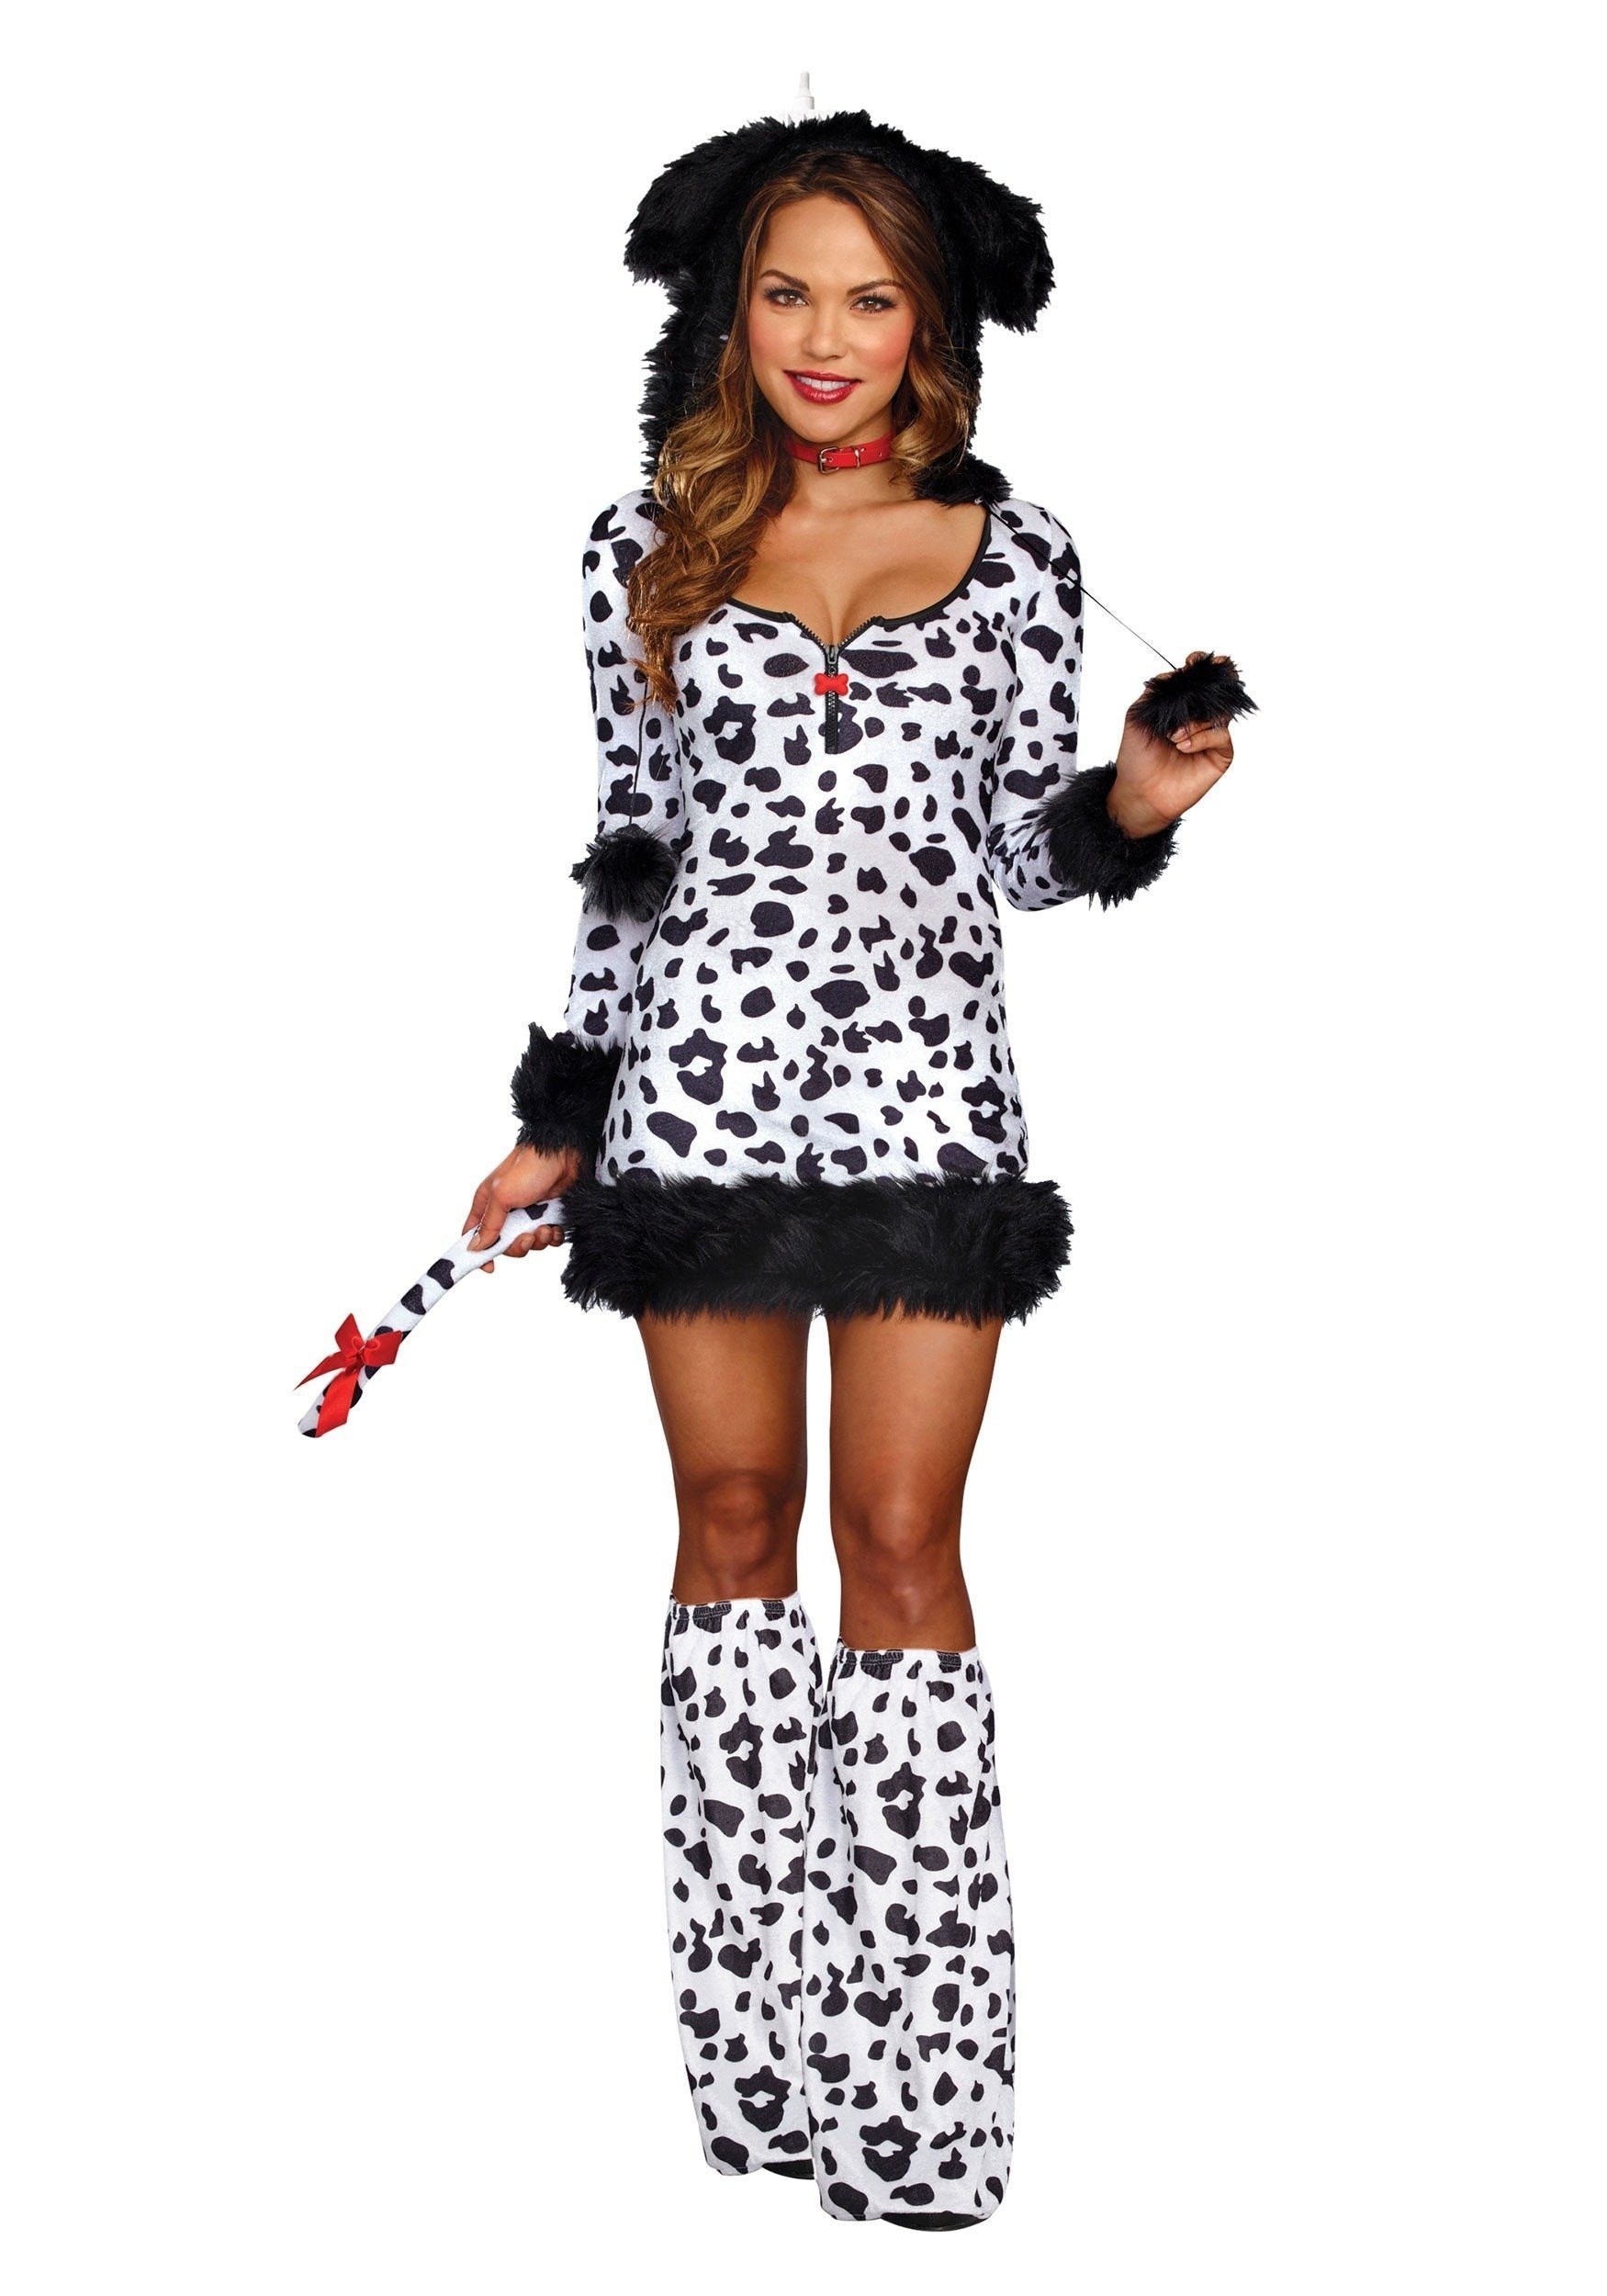 Dreamgirl Adult Dalmatian Costume, Womens Darling Dalmatian Halloween Costume - Large